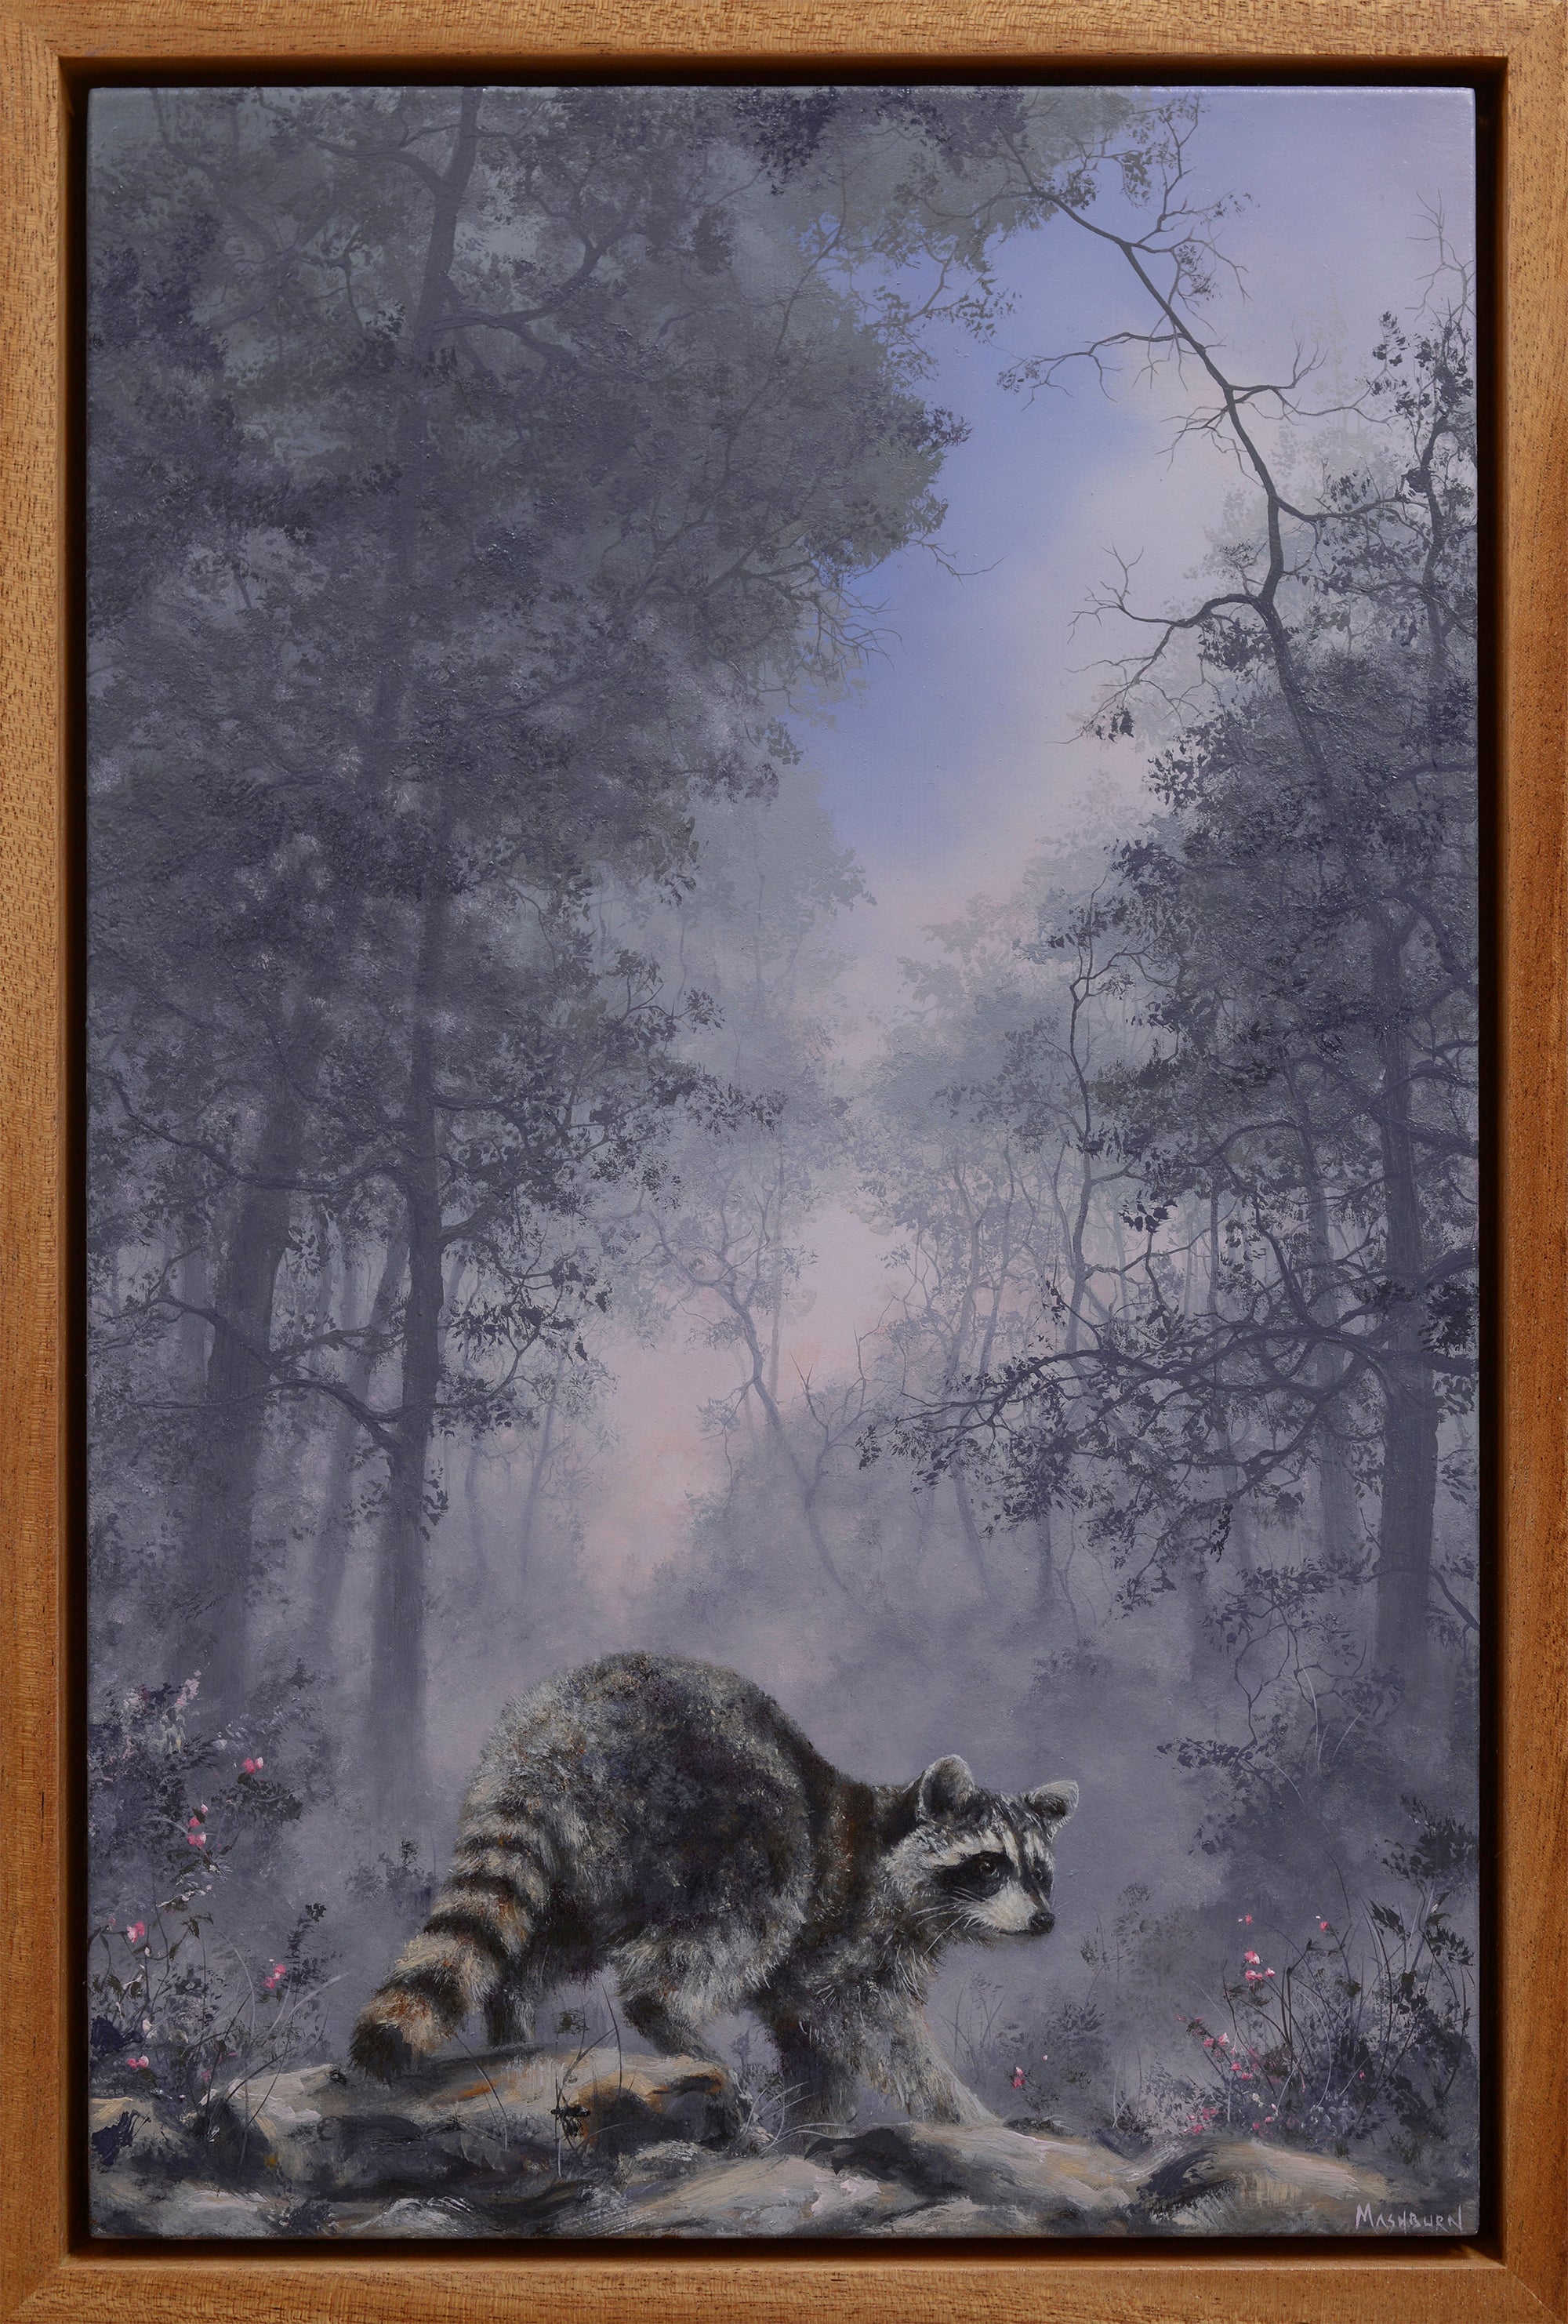 "Woodland with Raccoon"